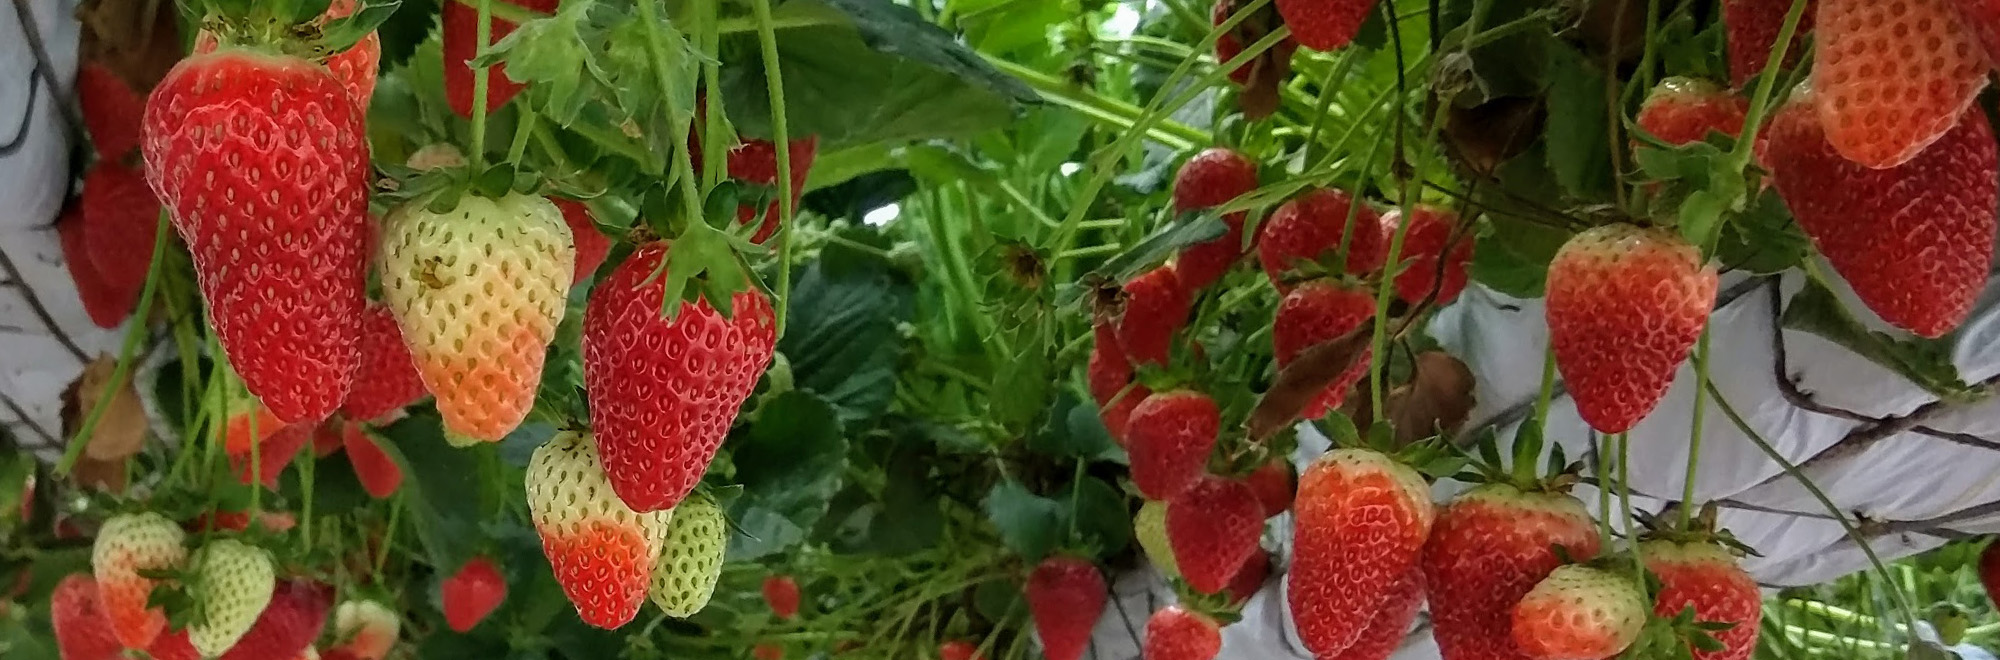 banner, strawberries